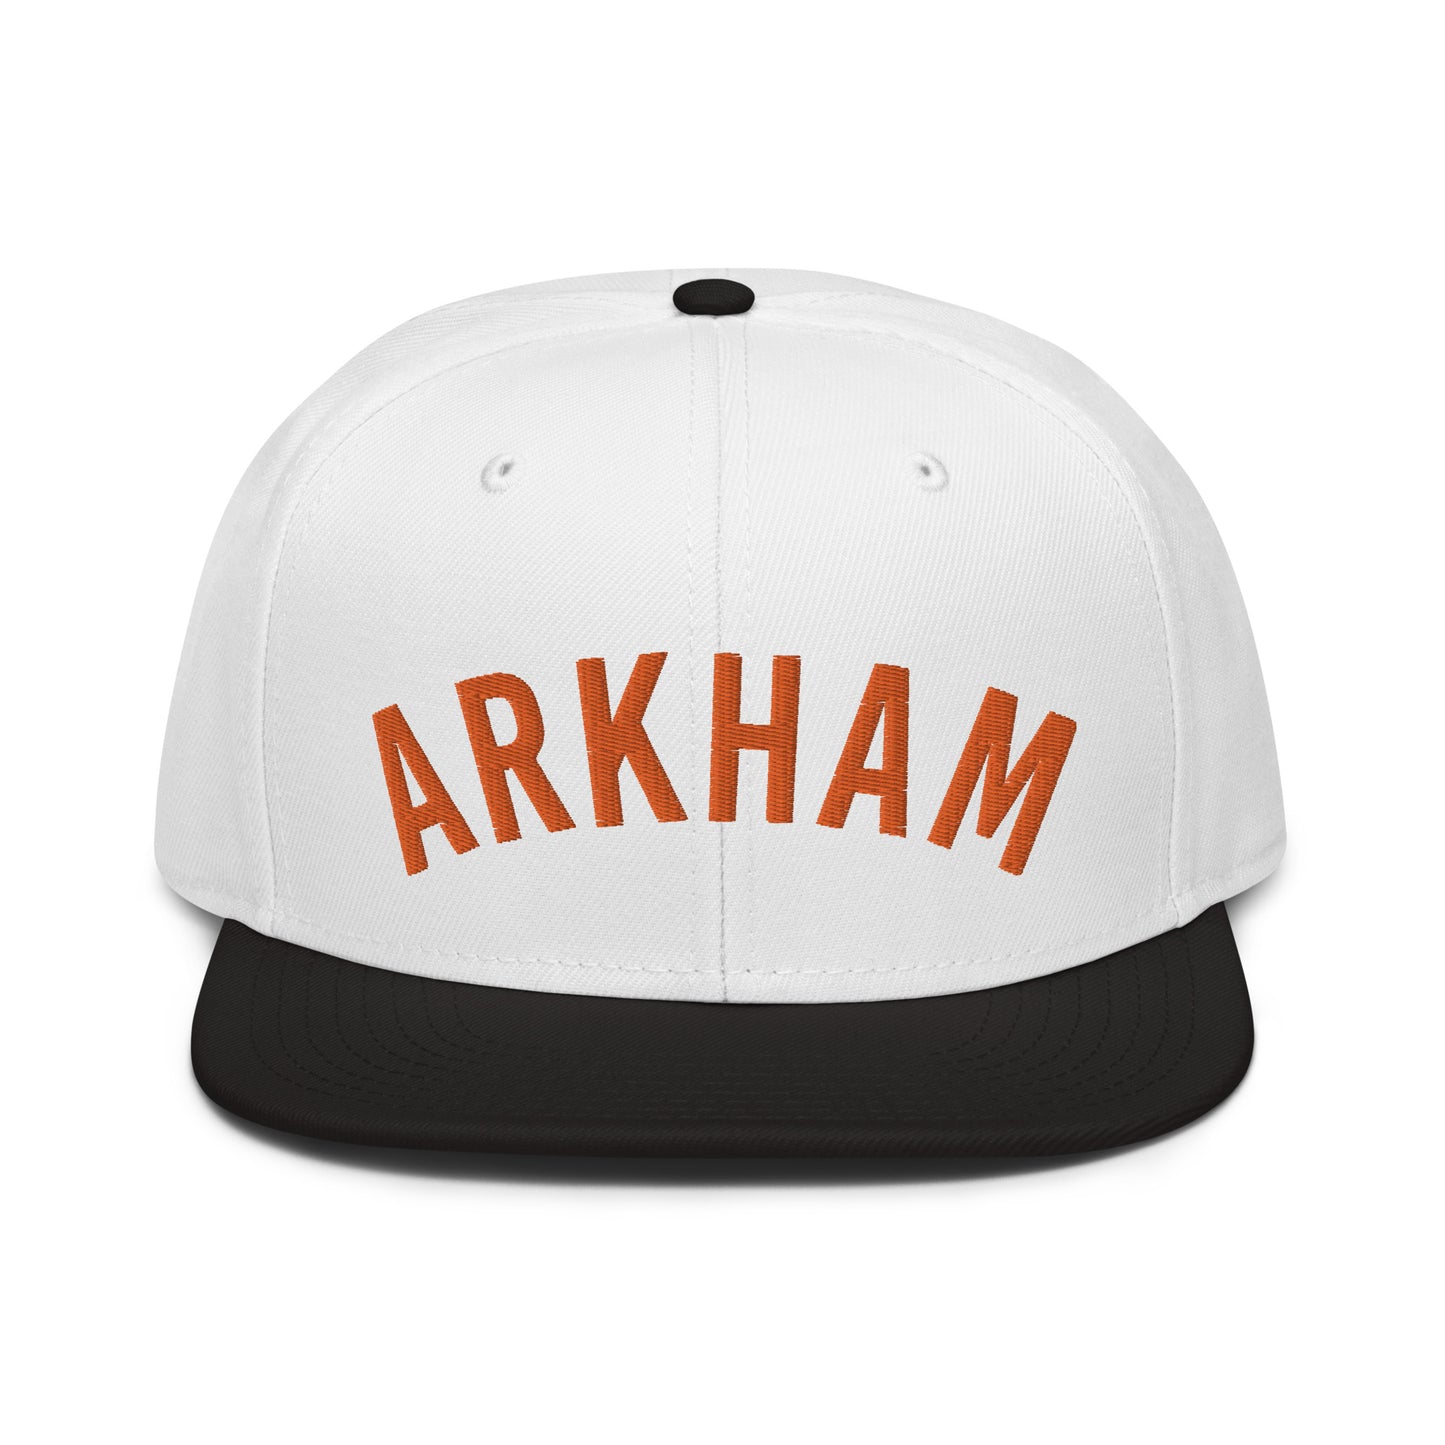 Arkham Home Team snapback hat